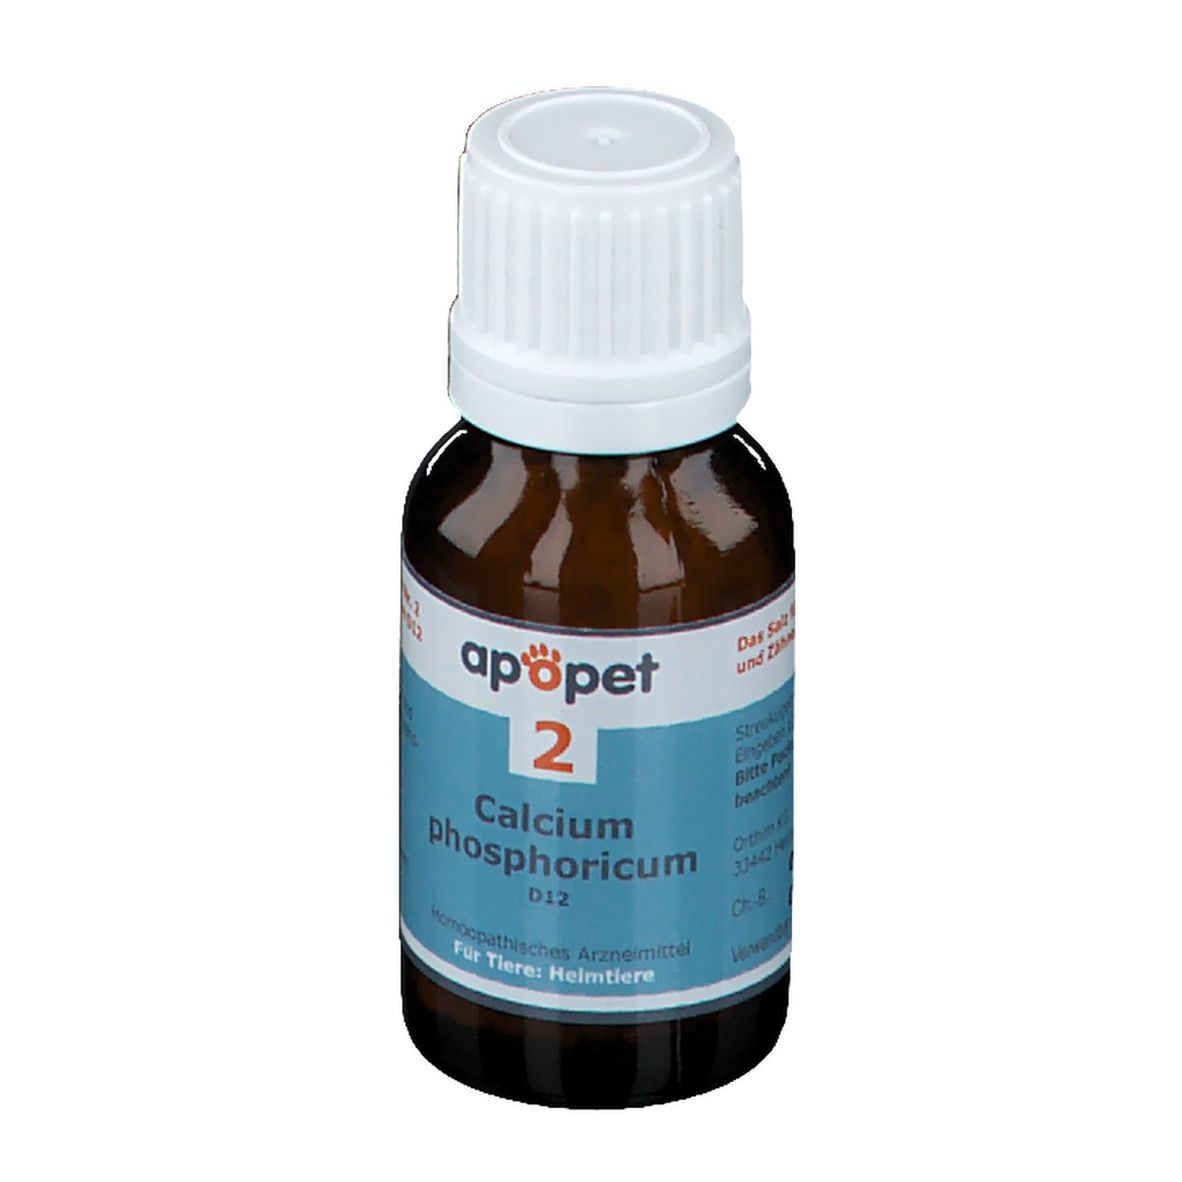 apopet® Schüßler Salz Nr. 2 Calcium phosphoricum D12 ad us. vet.